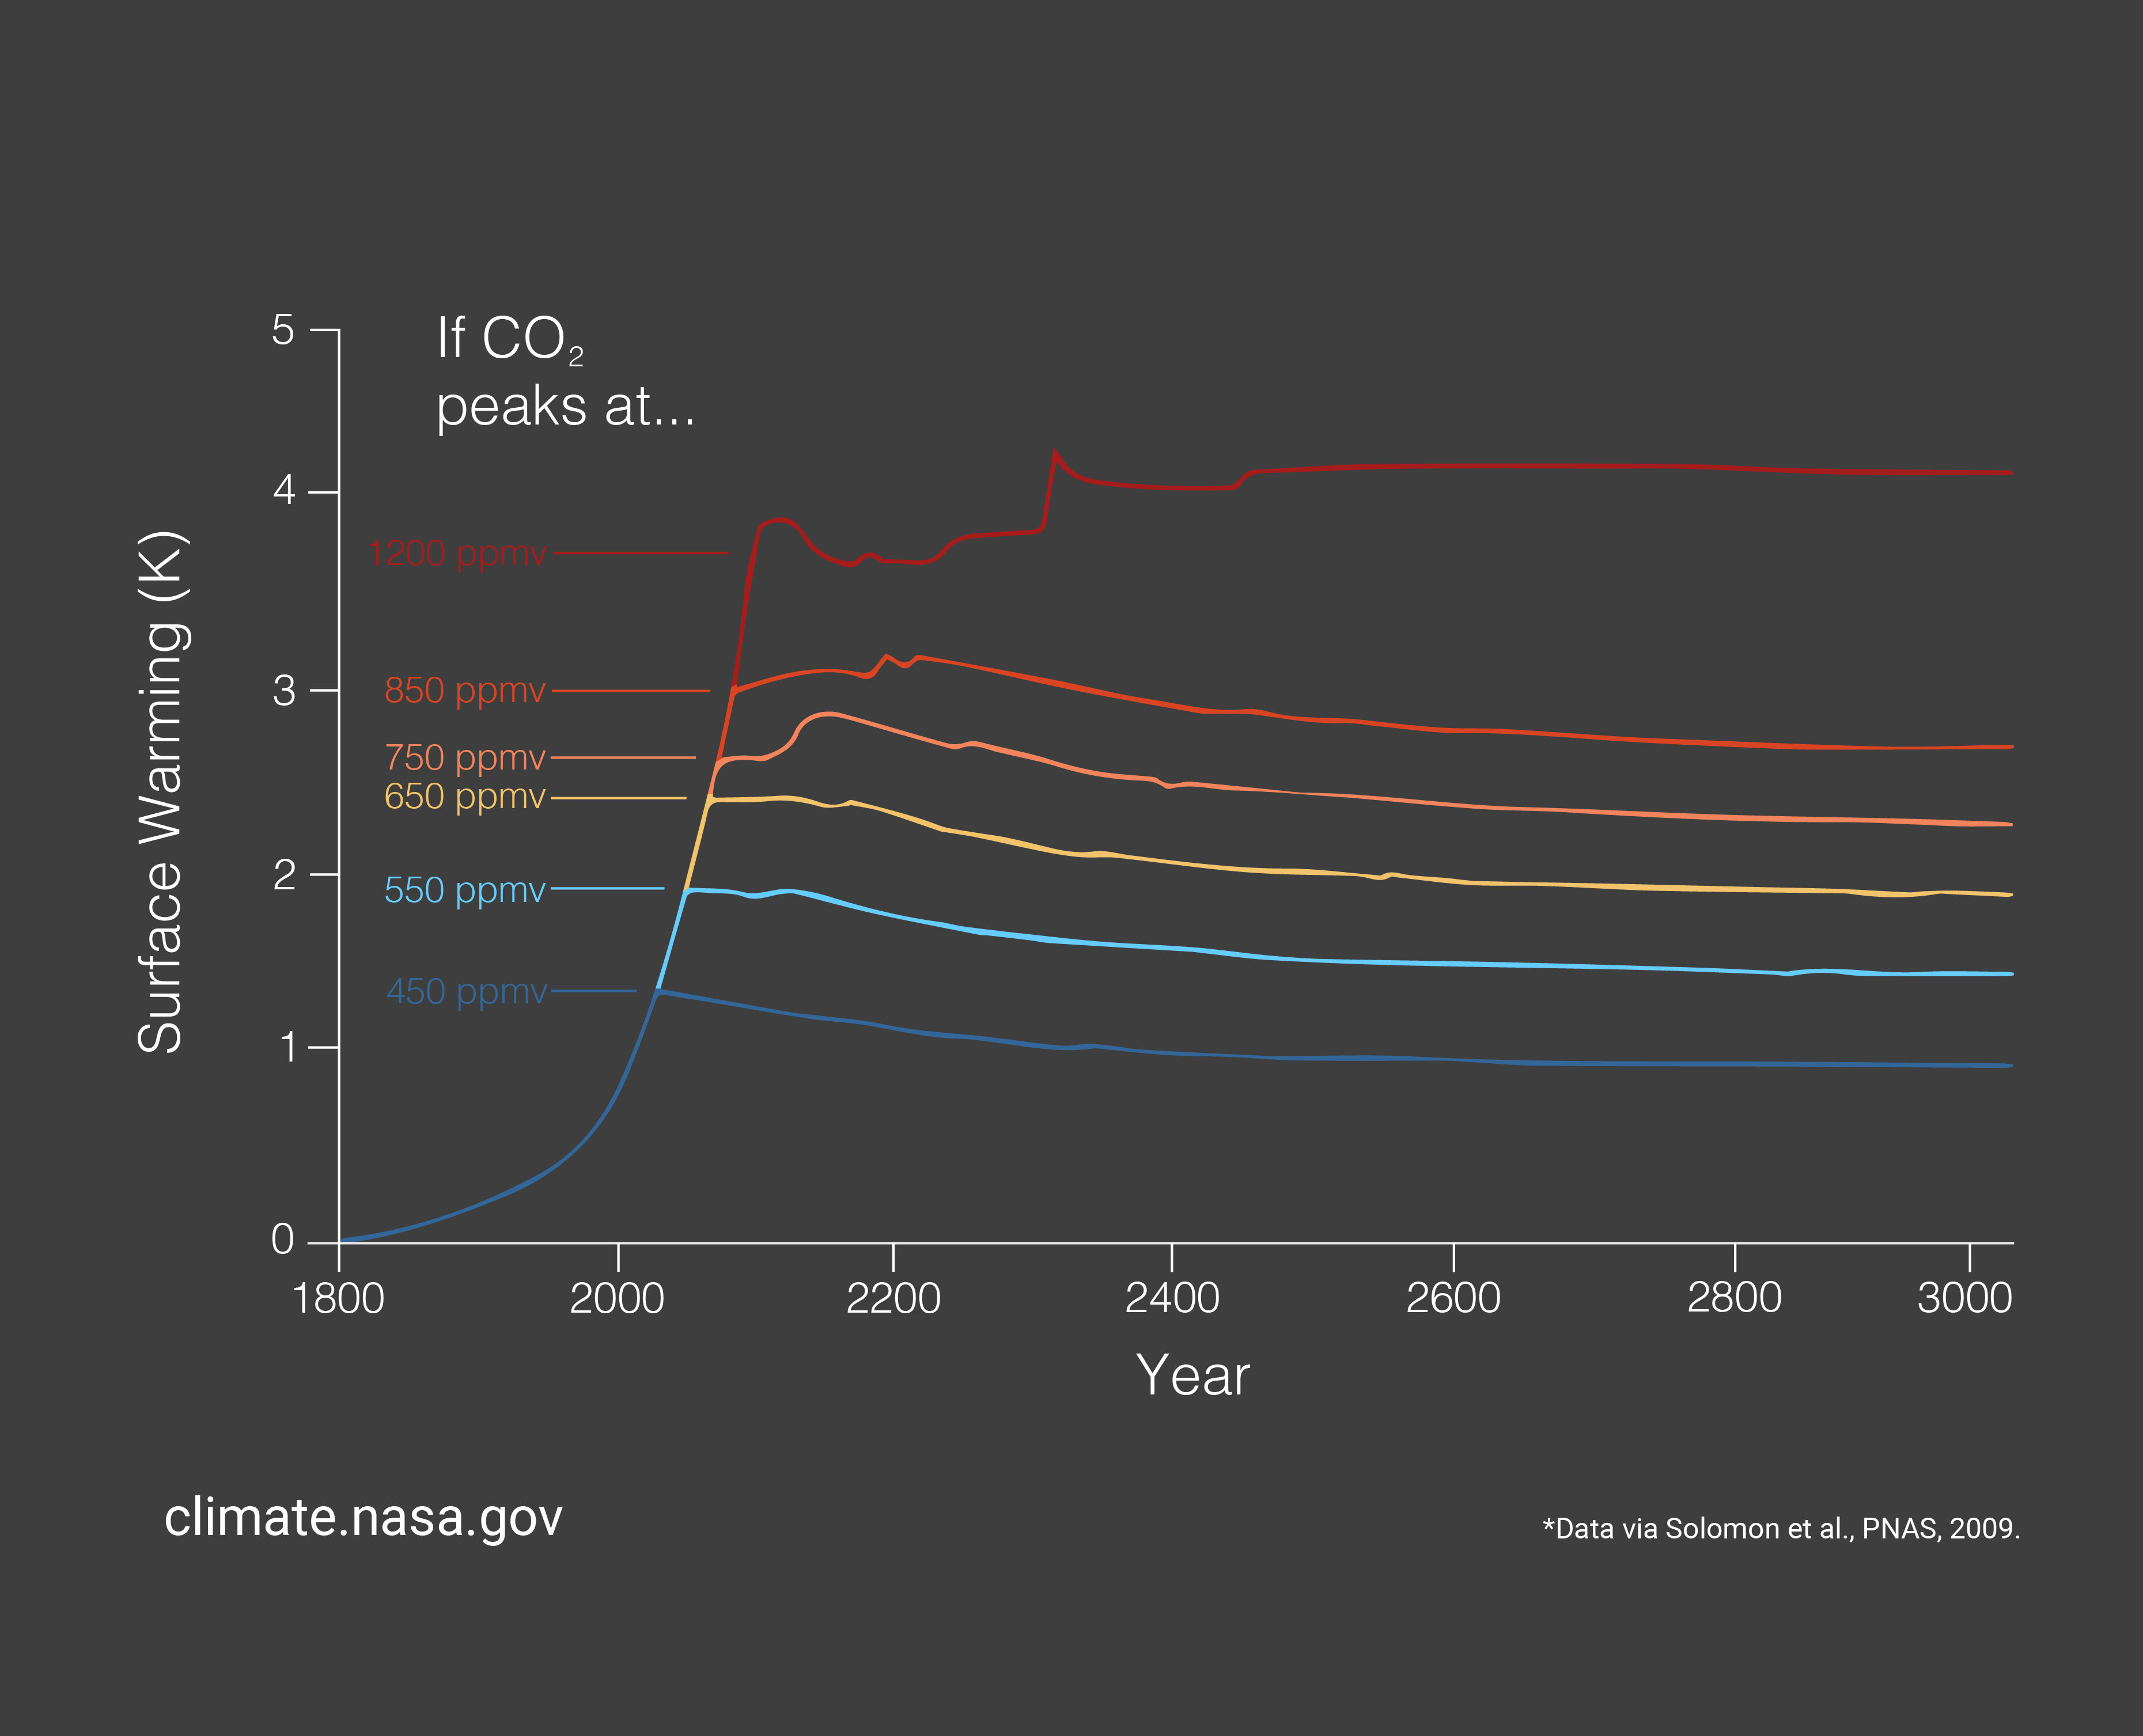 If CO2 peaks